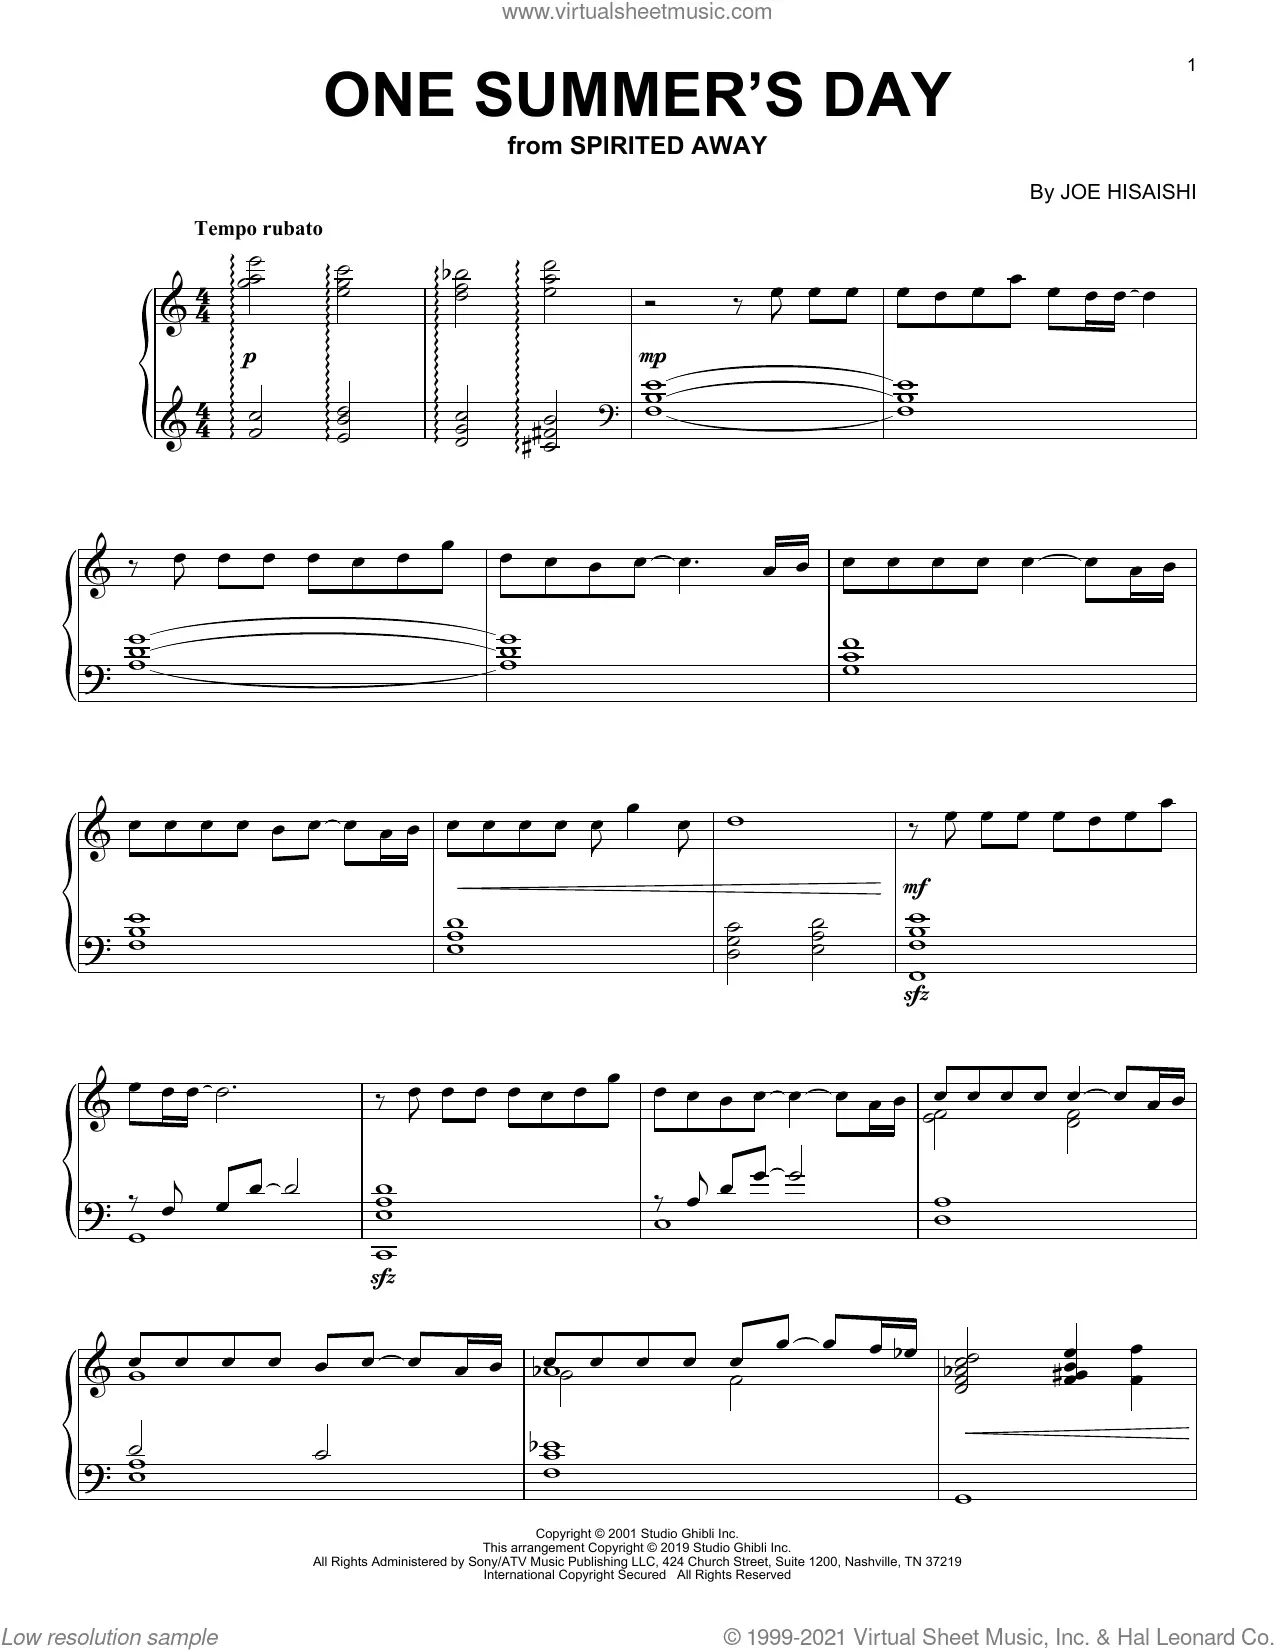 Red de comunicacion Río arriba Perforar Download Digital Sheet Music of joe hisaishi for Piano solo